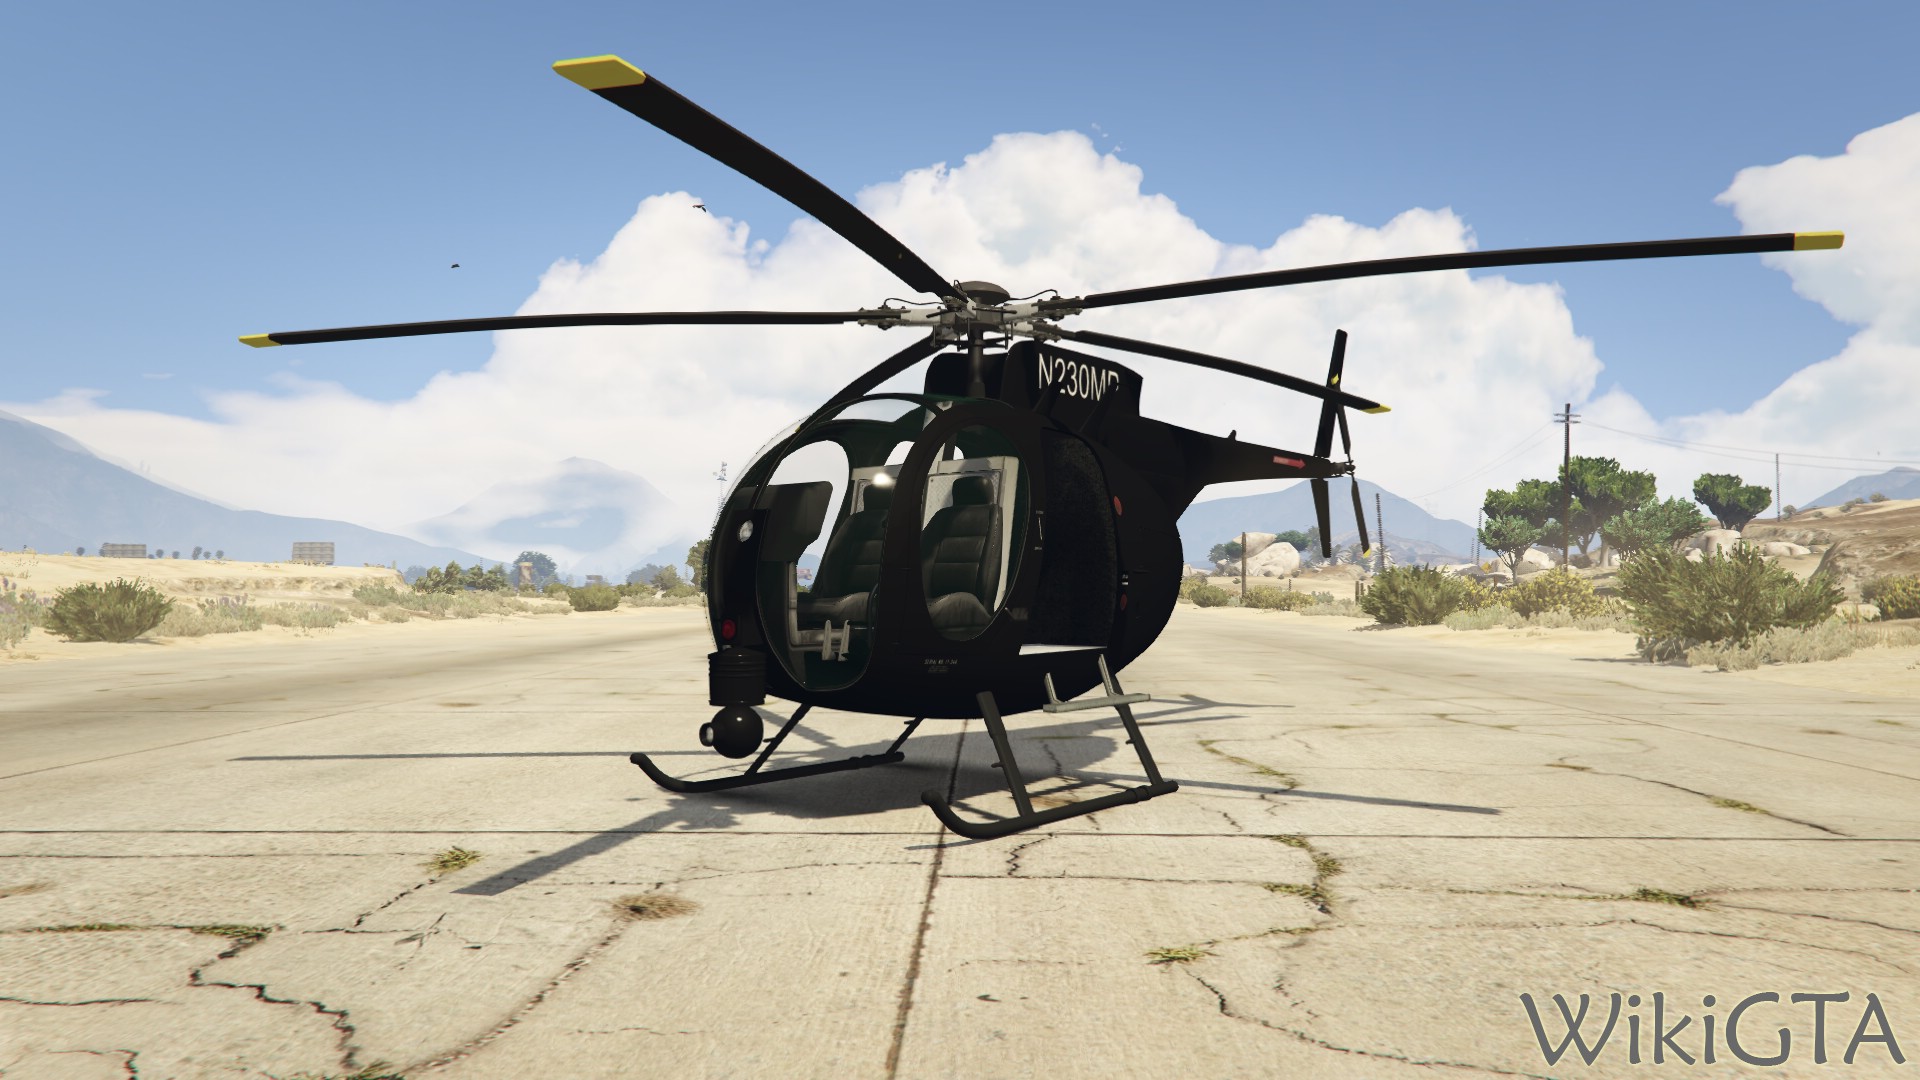 Buzzard Attack Chopper